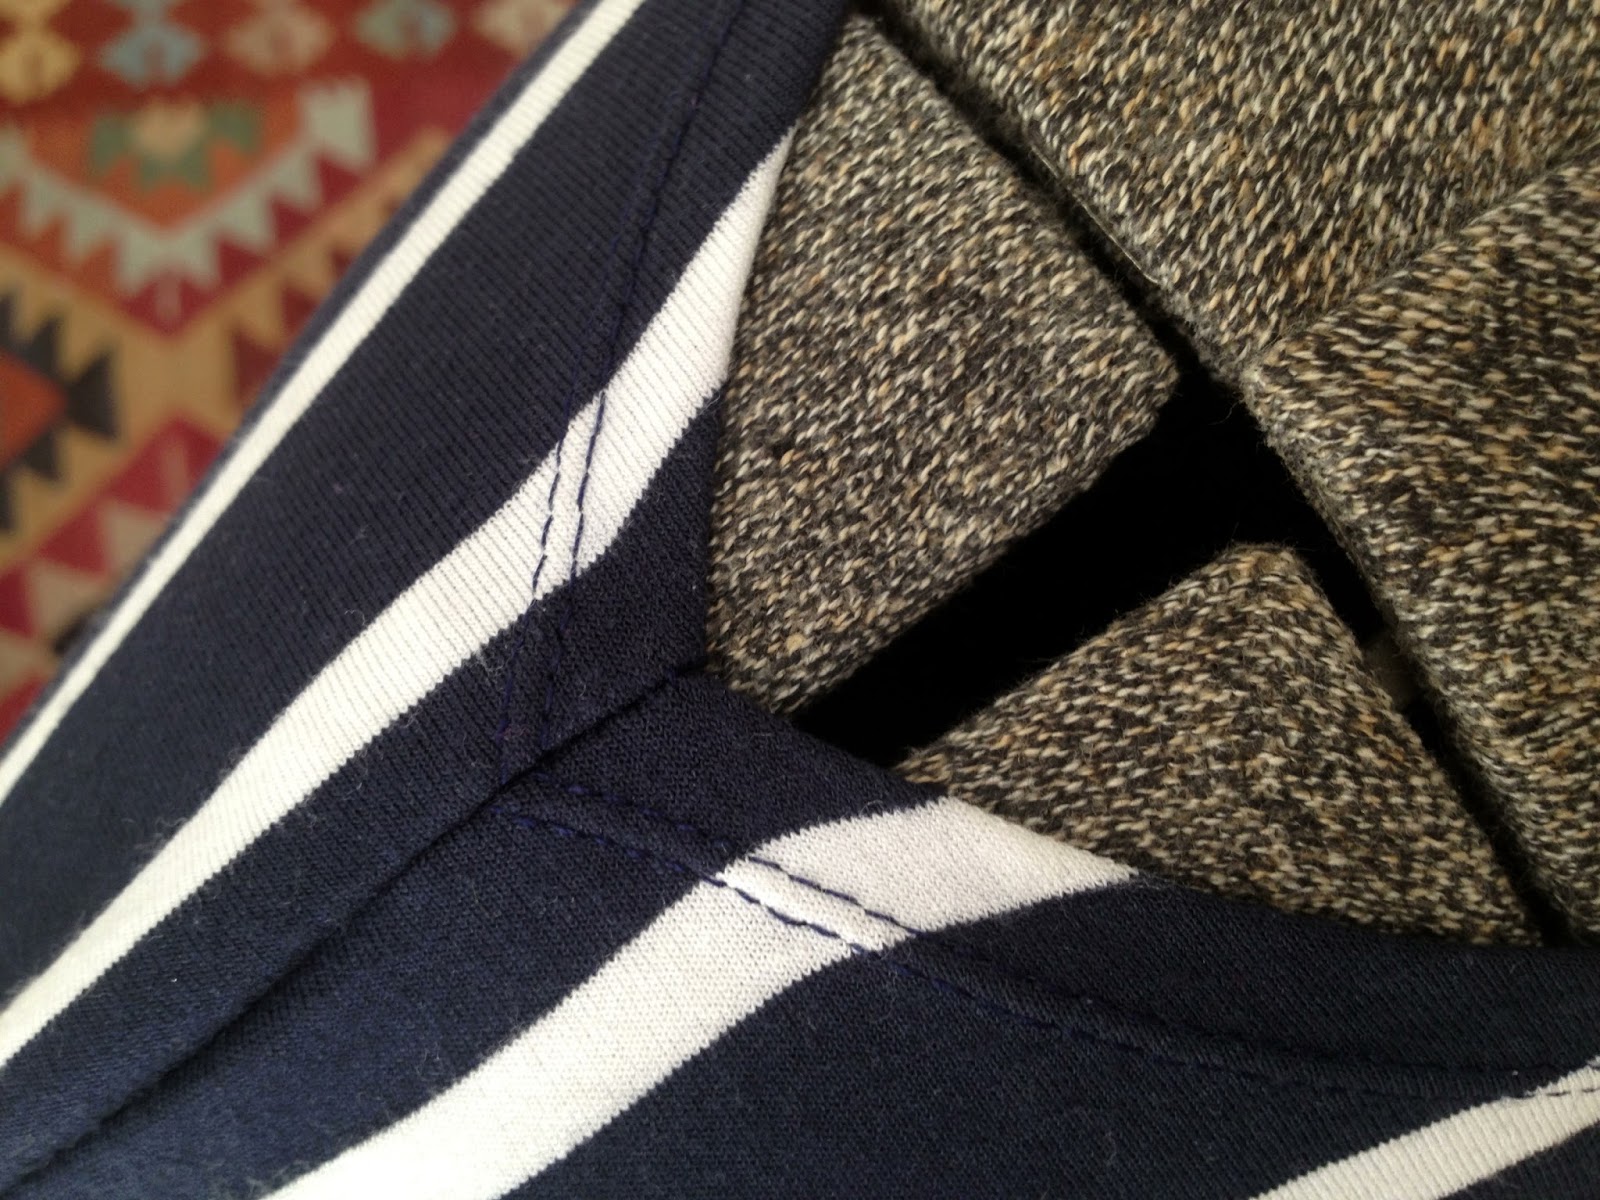 Sew Tessuti Blog - Sewing Tips & Tutorials - New Fabrics, Pattern ...